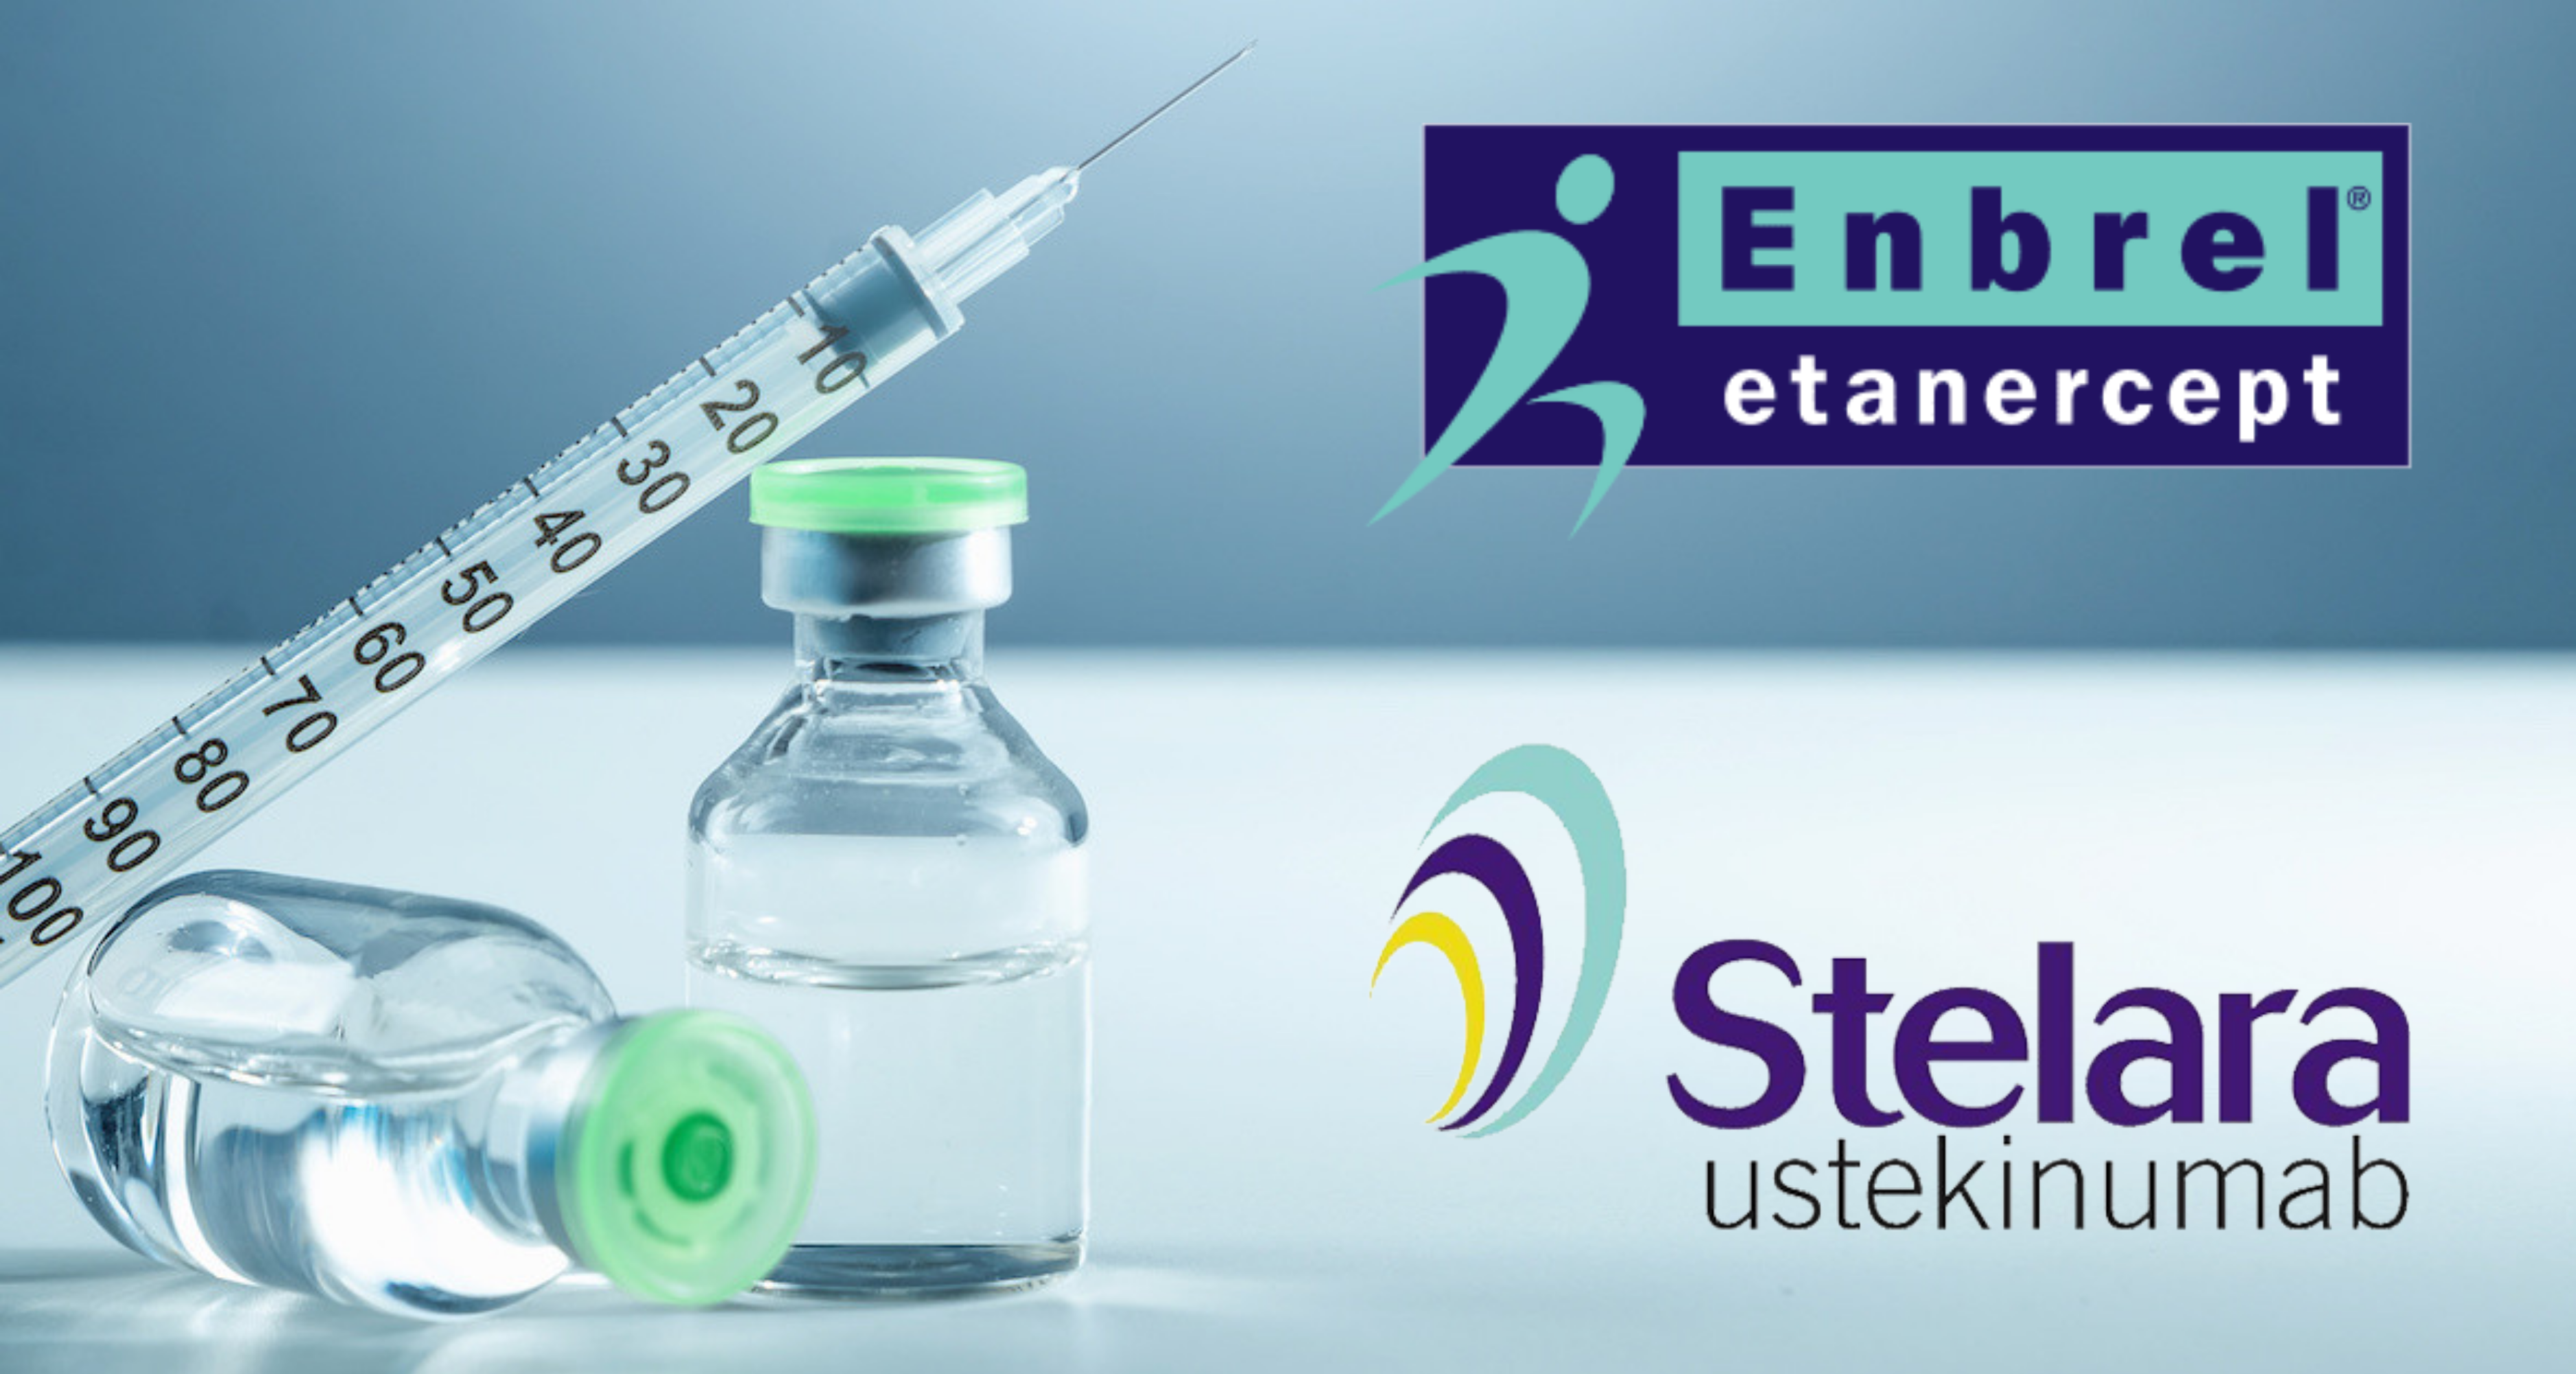 syringe and vials with Stelara and Enbrel logos | Image credit: Aliaksandr Marko - stock.adobe.com.